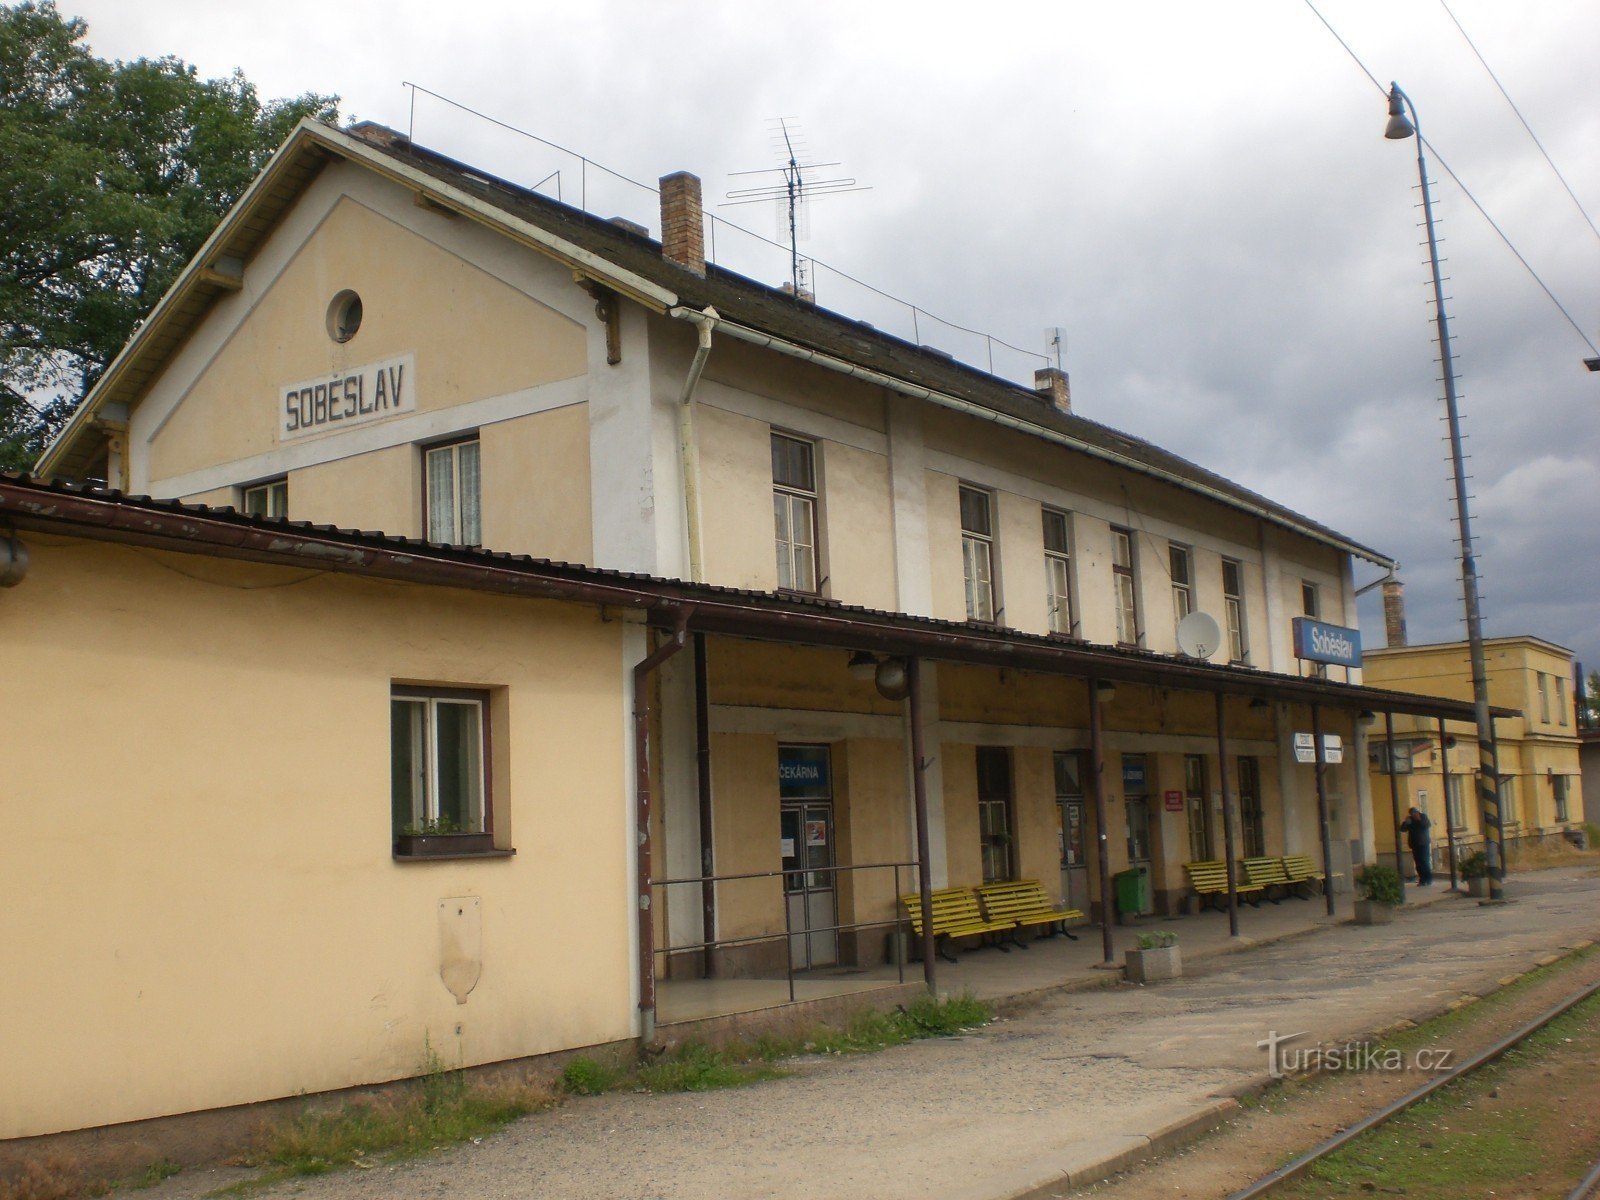 Soběslav - railway station